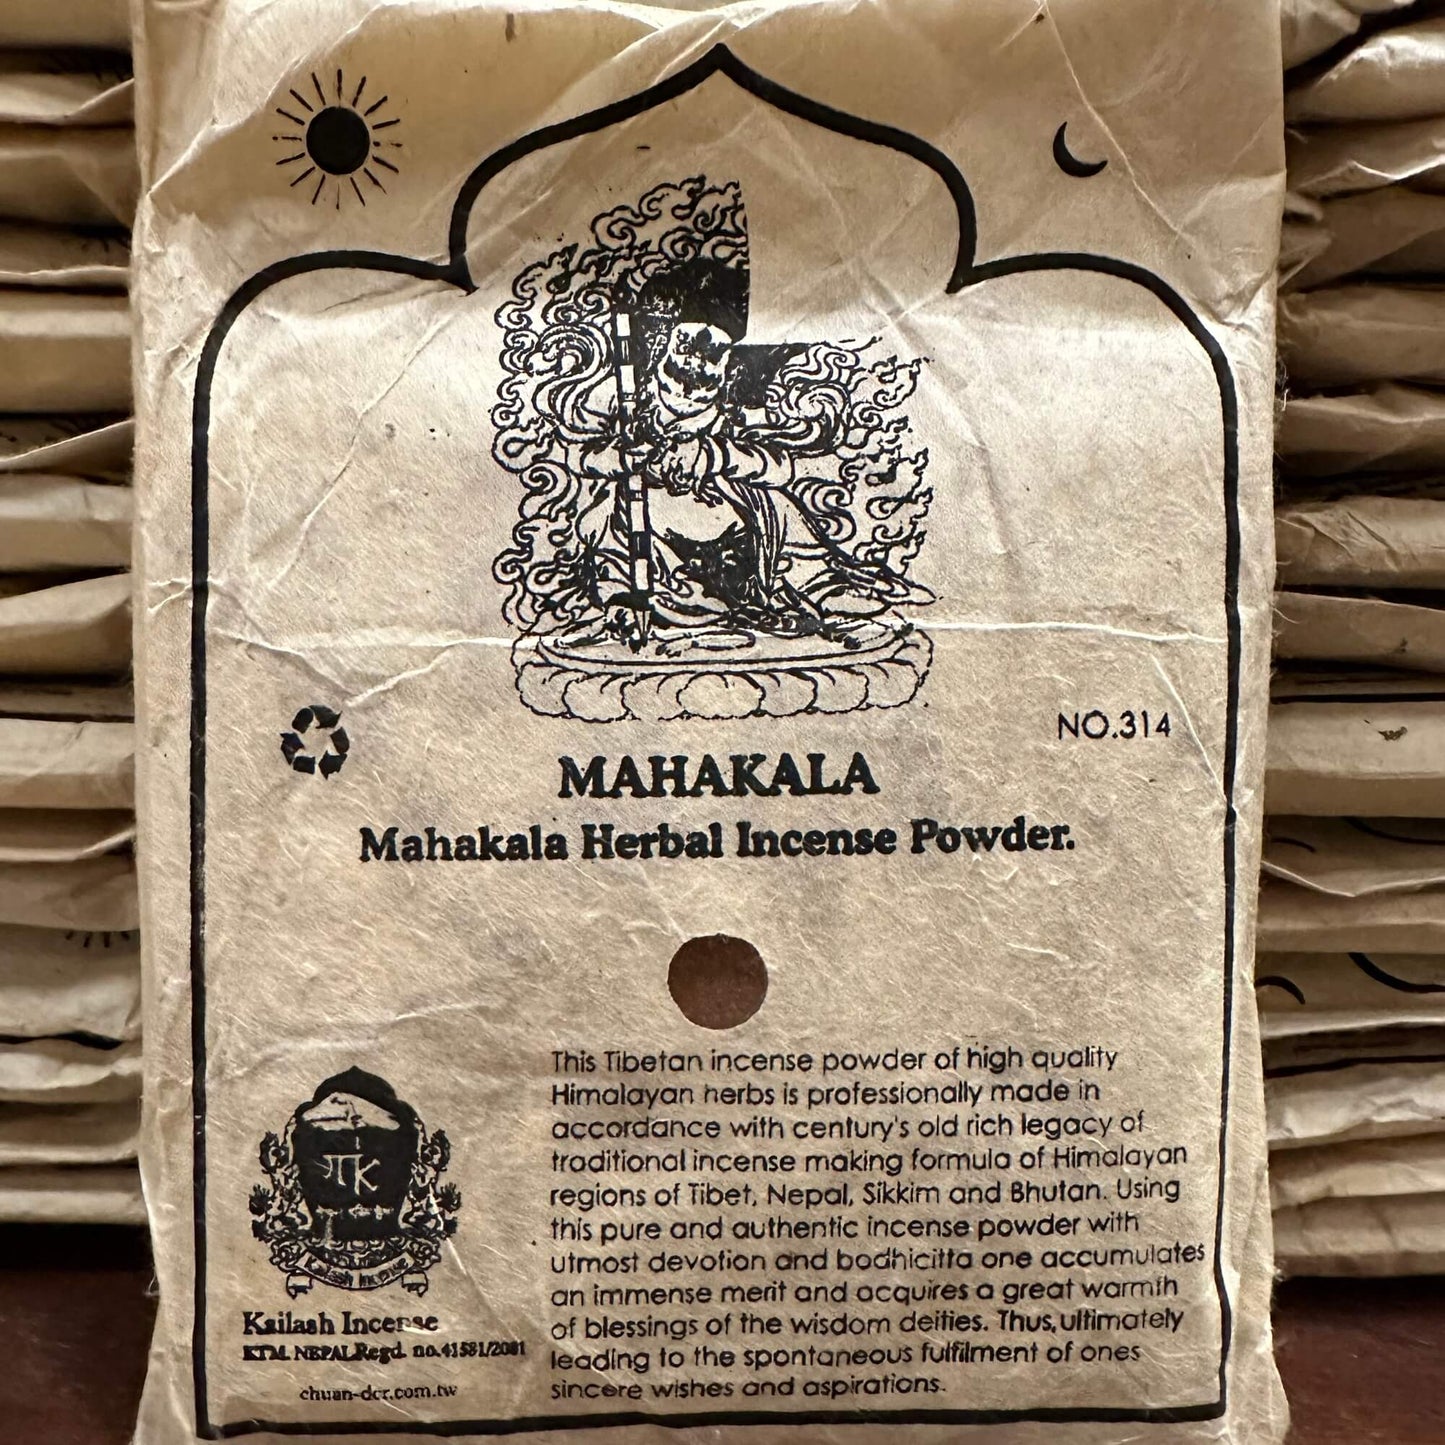 Tibetan Herbal Incense Powder